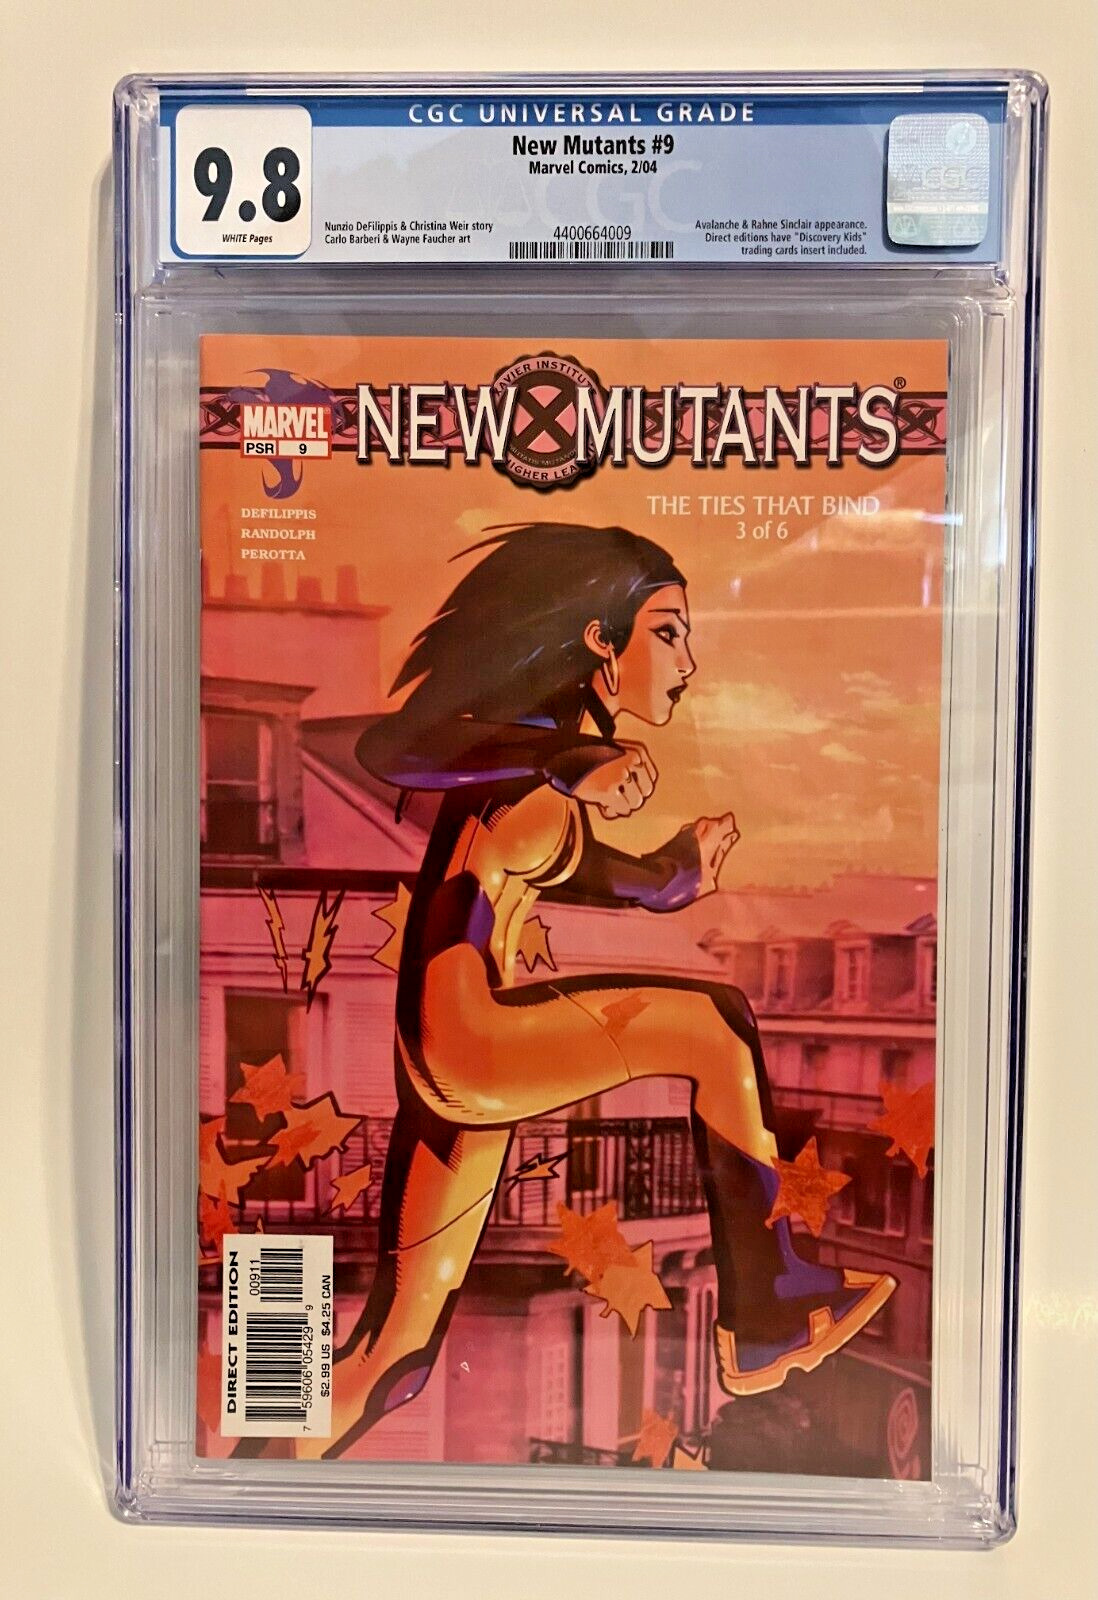 New Mutants #9 - CGC 9.8 - 2003 Series - Avalanche & Rahne Sinclair Appearance